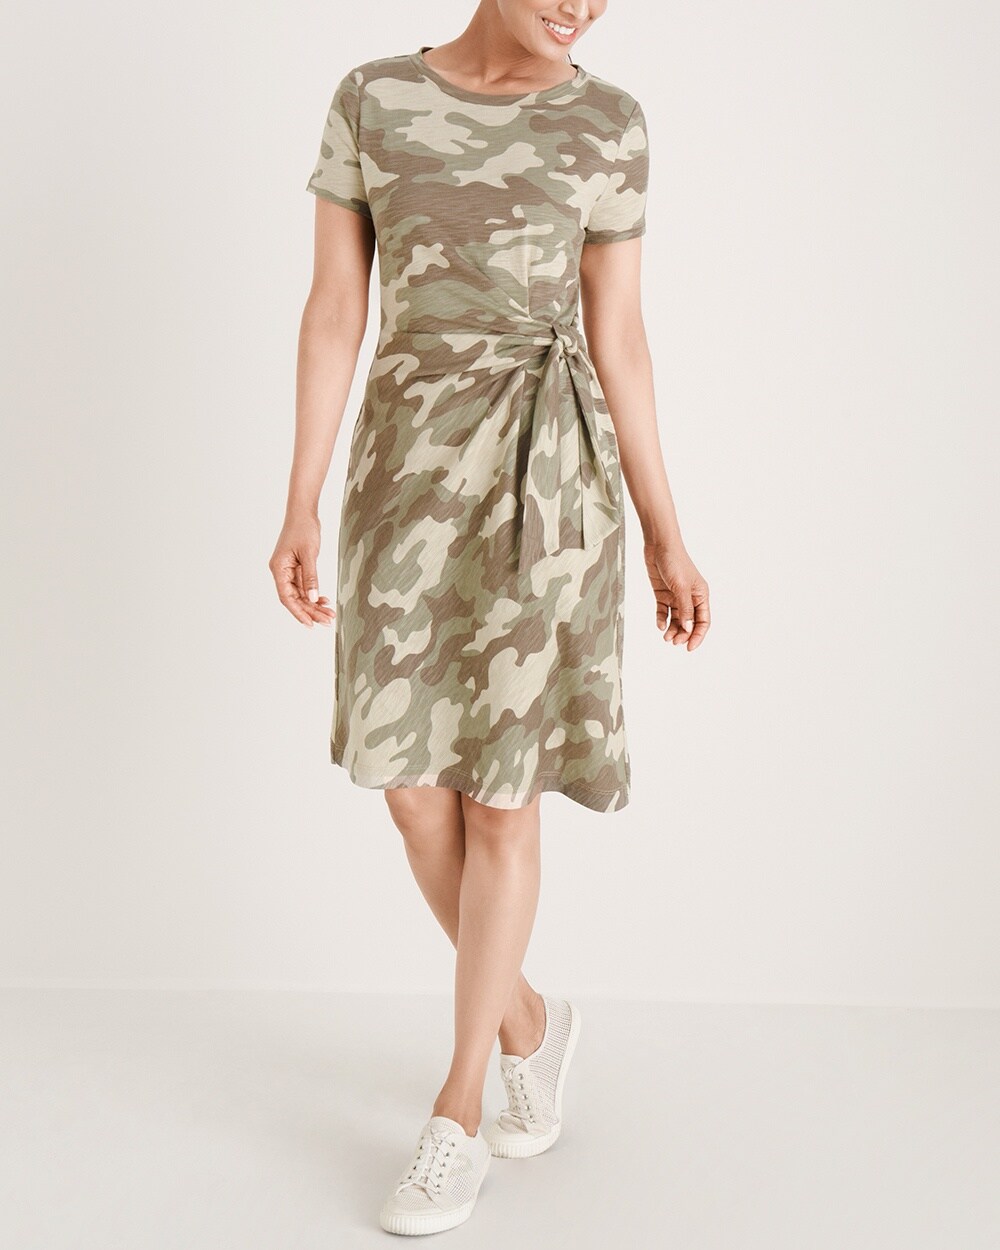 Camouflage-Print Side-Tie Dress